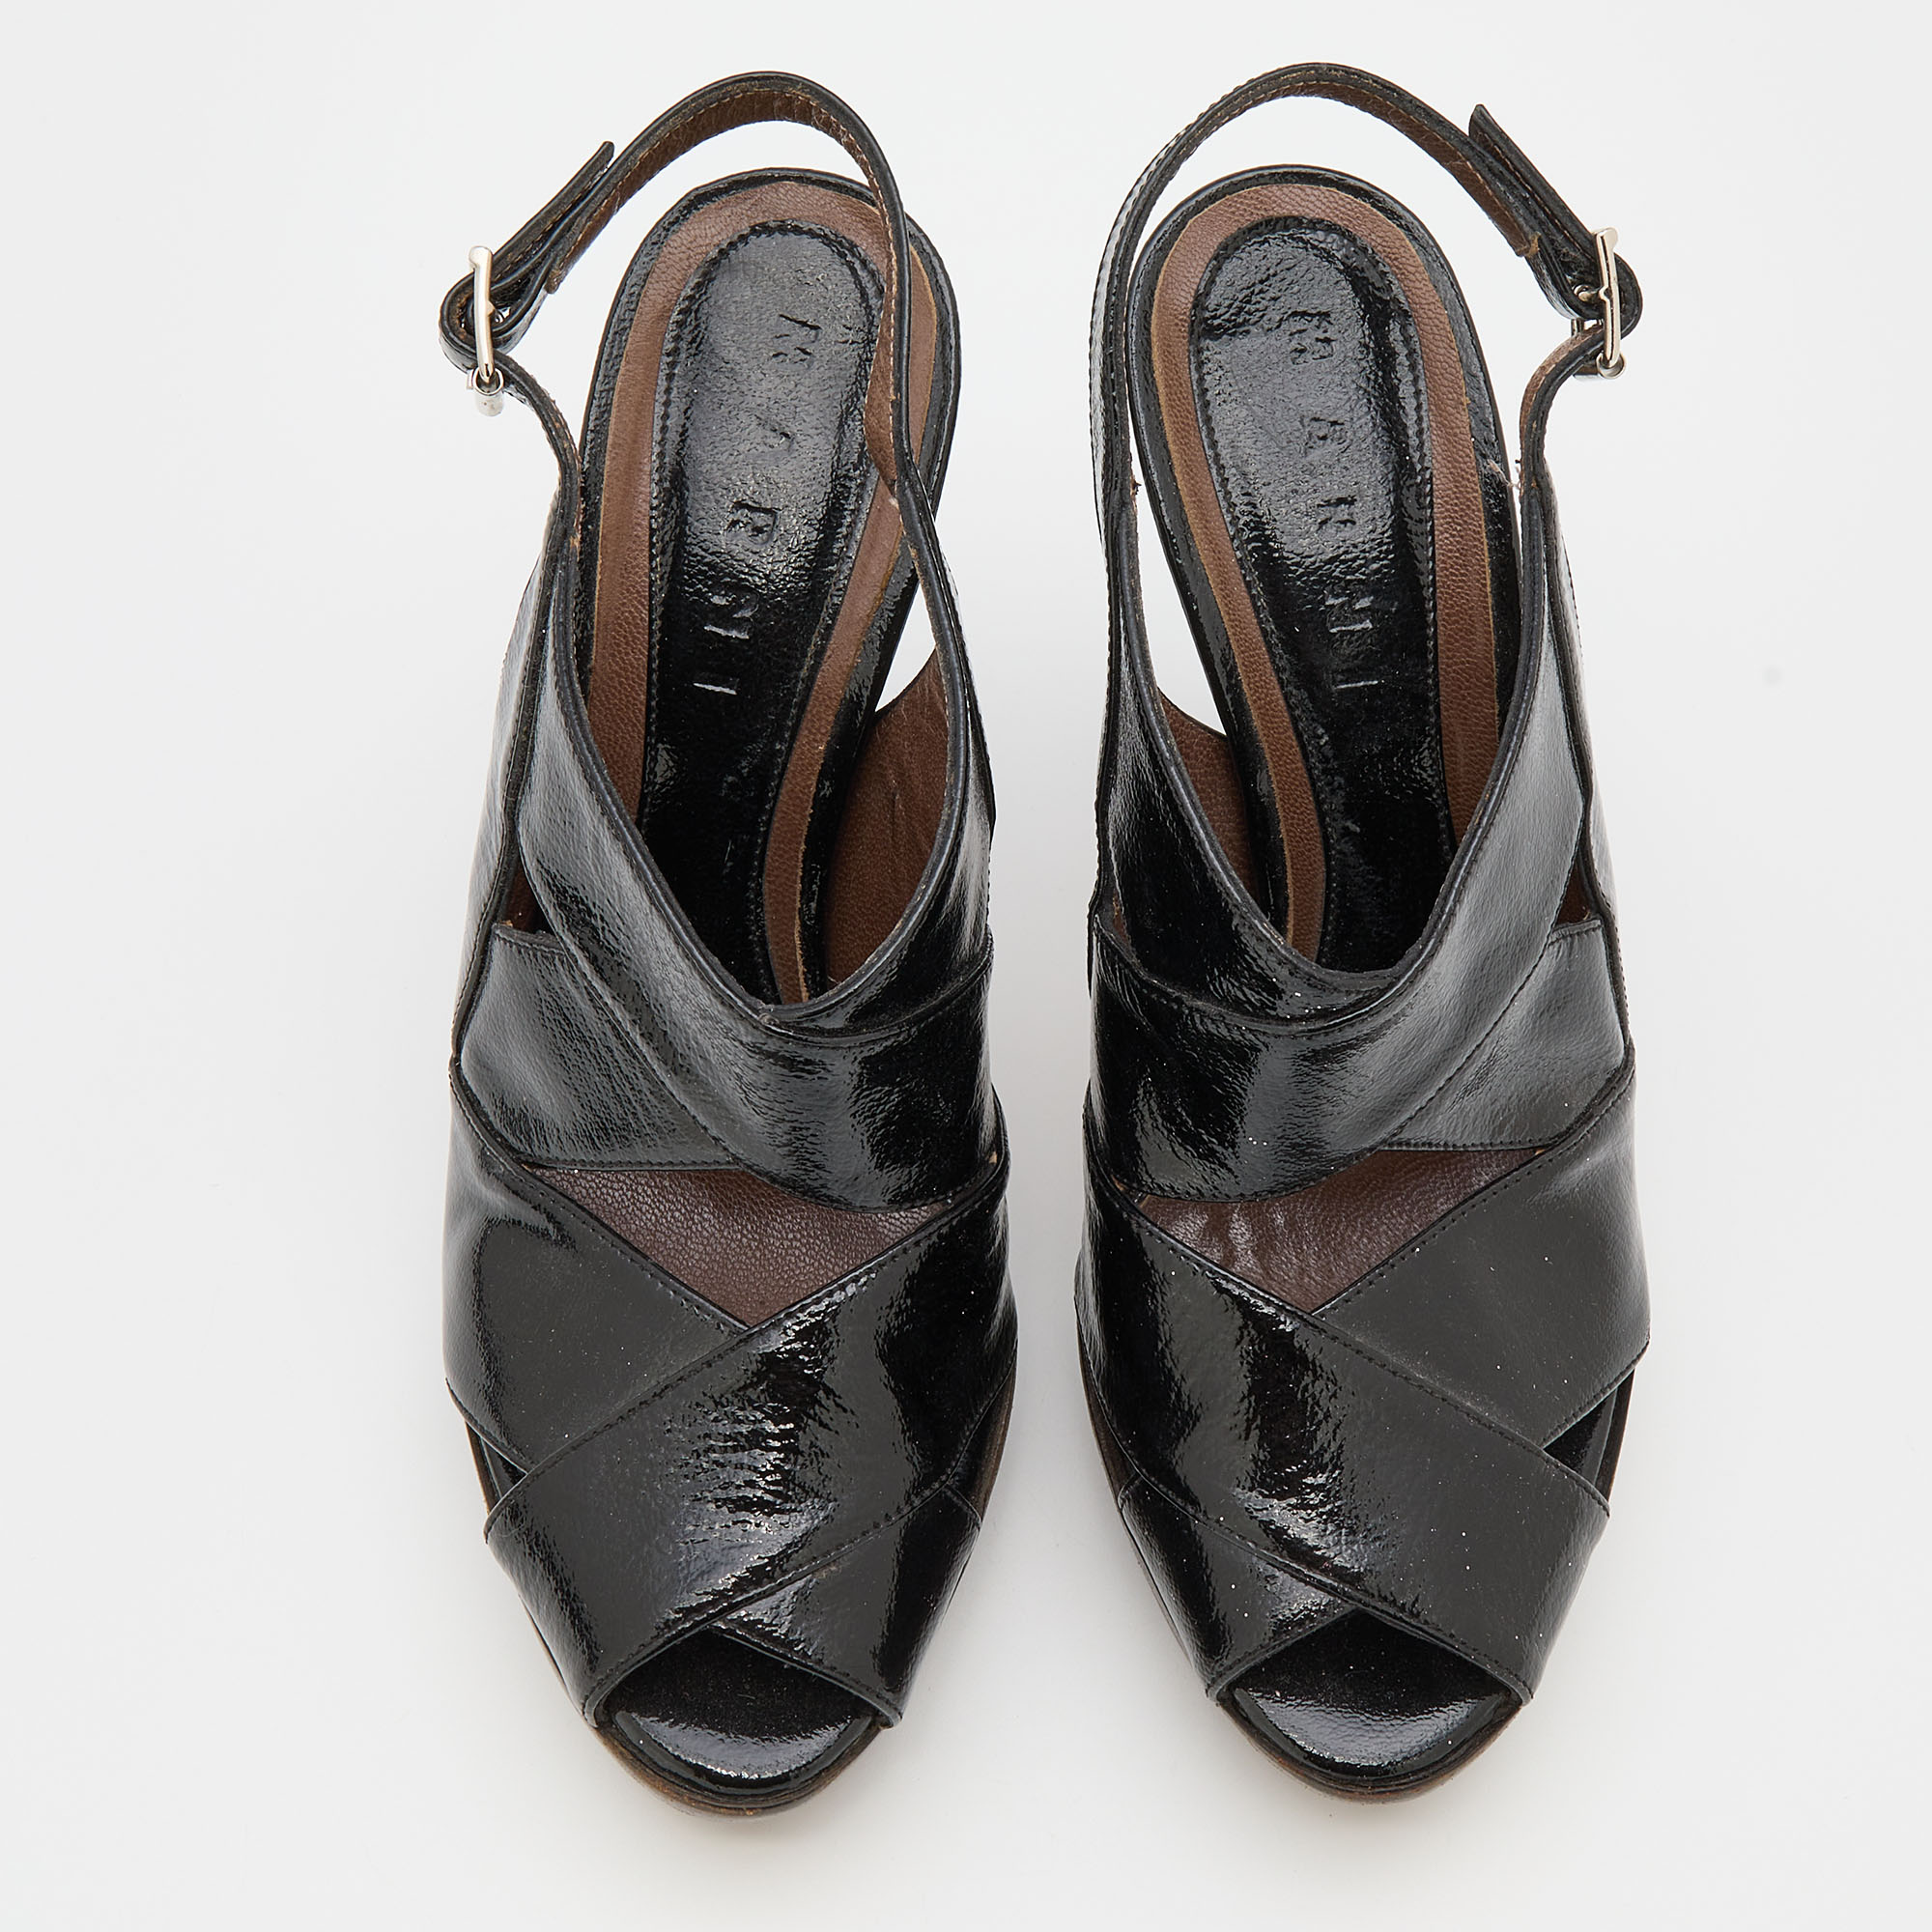 Marni Black Patent Leather Slingback Platform Sandals Size 37.5